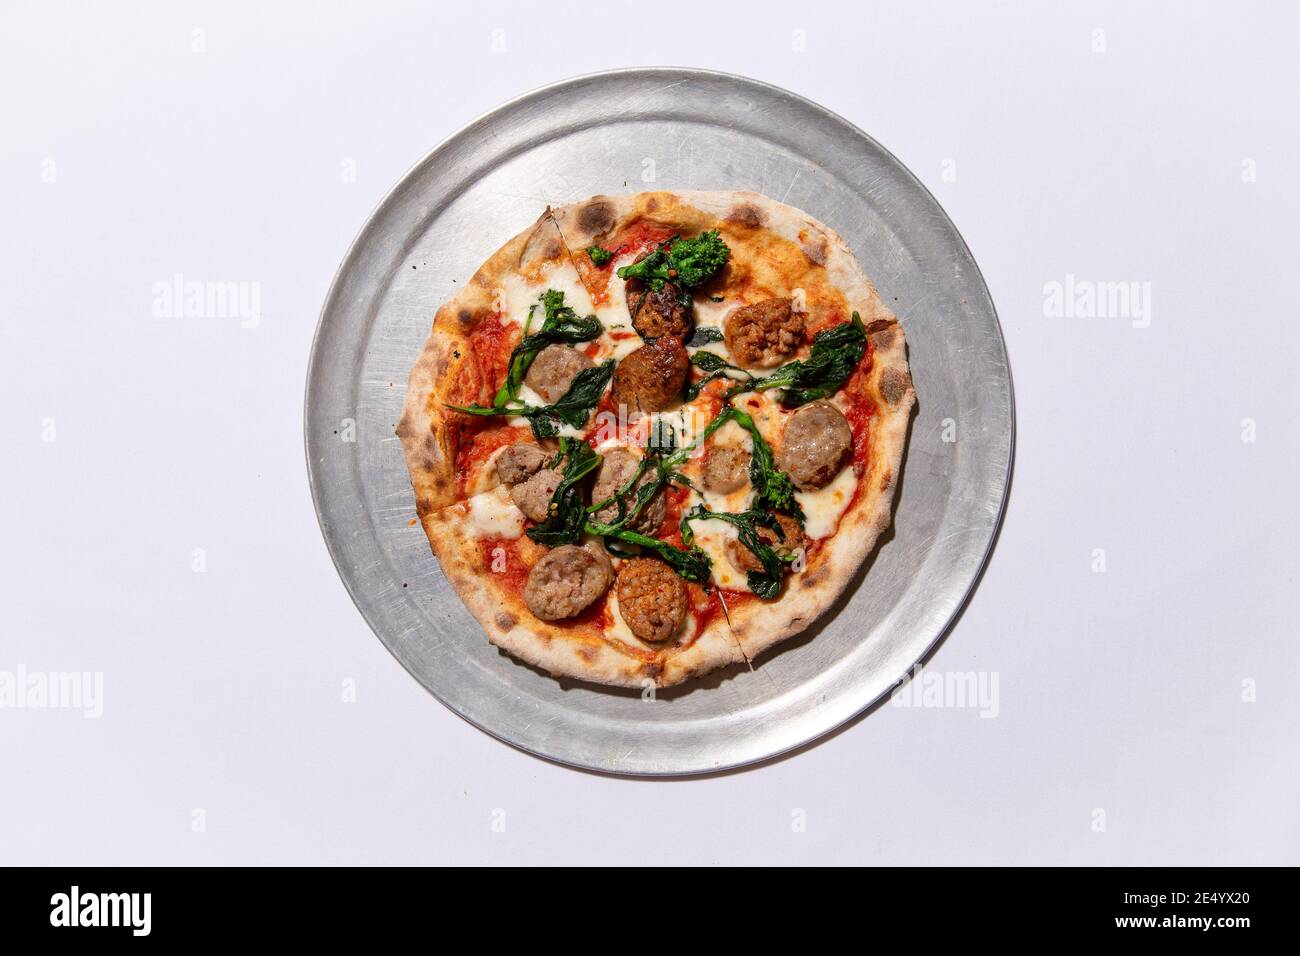 High Angle View of Brick Oven Pizza with Sausage and Broccoli Raab Stock Photo